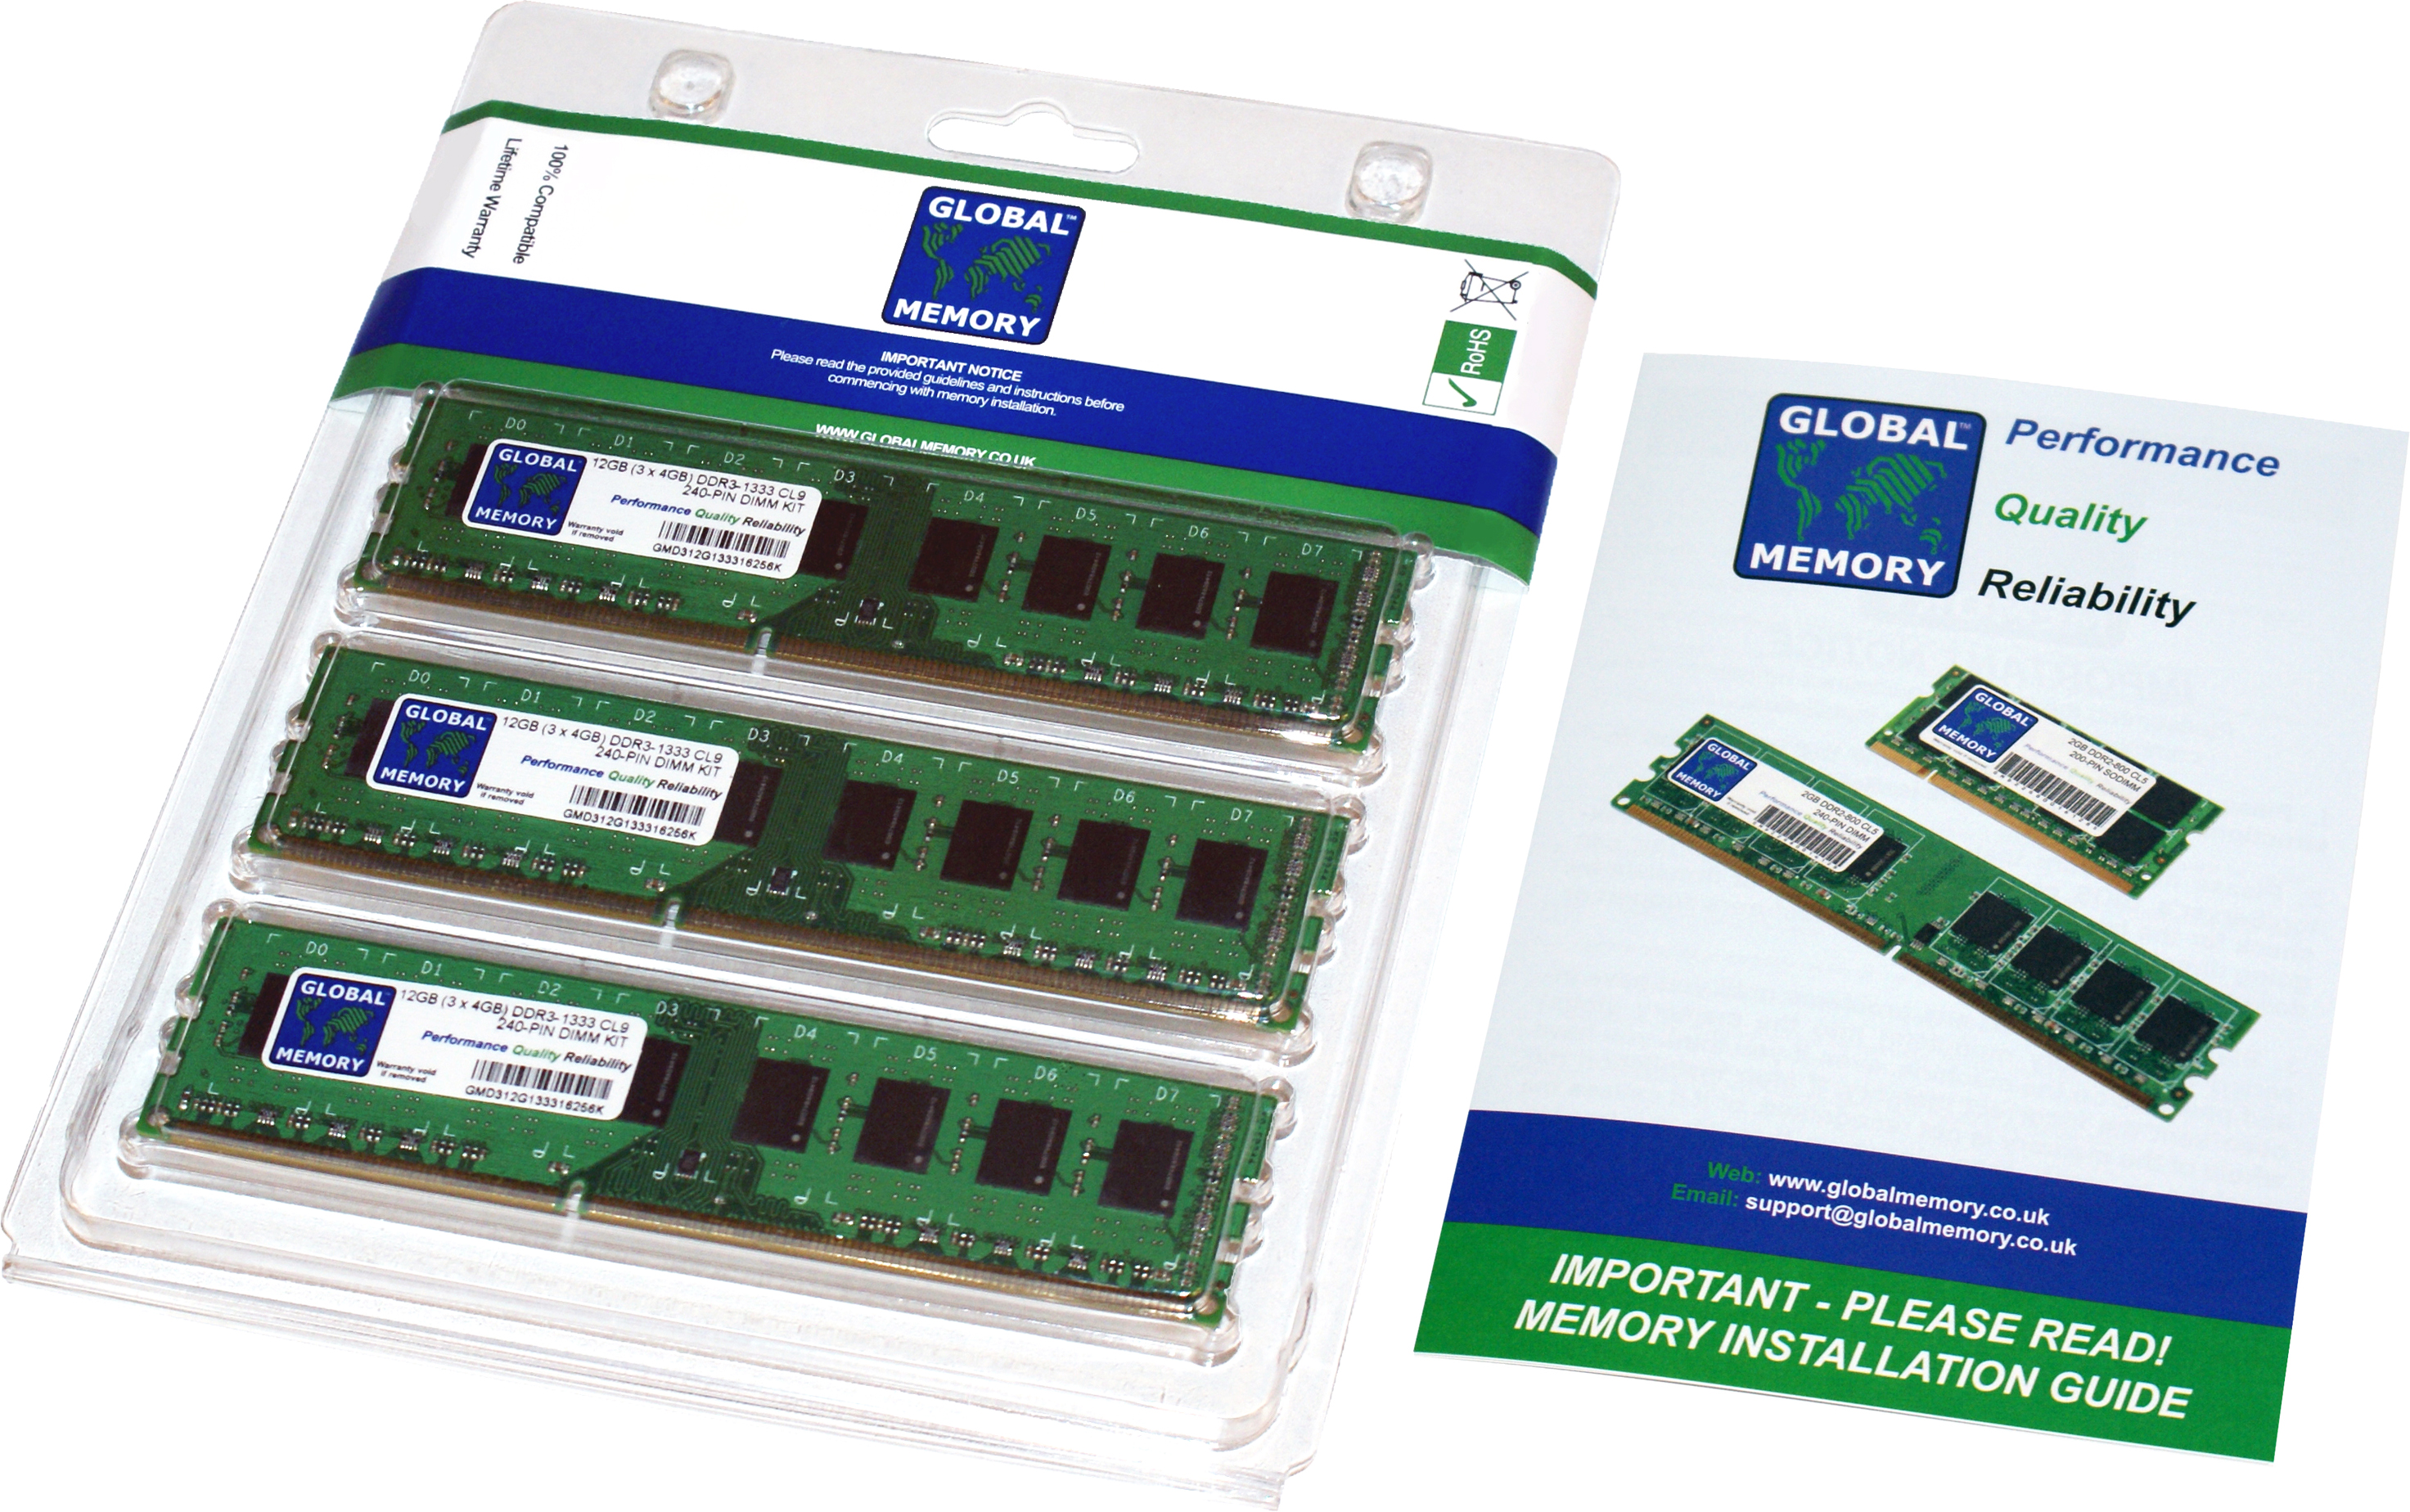 12GB (3 x 4GB) DDR3 1866MHz PC3-14900 240-PIN DIMM MEMORY RAM KIT FOR PC DESKTOPS/MOTHERBOARDS